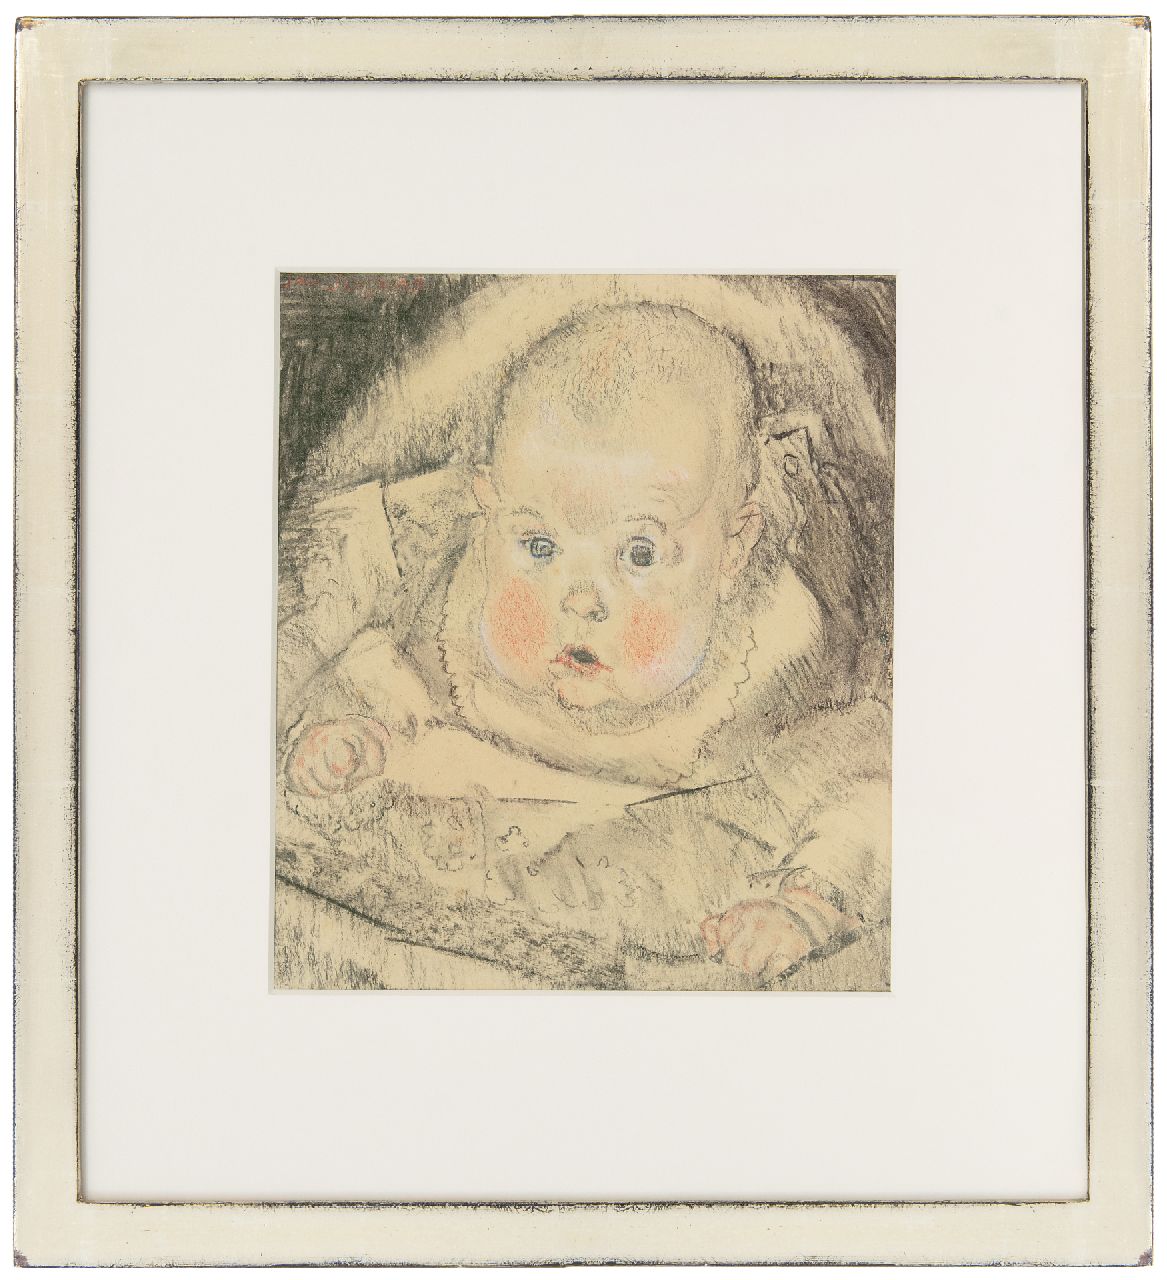 Sluijters J.C.B.  | Johannes Carolus Bernardus 'Jan' Sluijters | Watercolours and drawings offered for sale | Portrait of a baby, charcoal and chalk on paper 29.0 x 25.3 cm, signed u.l.